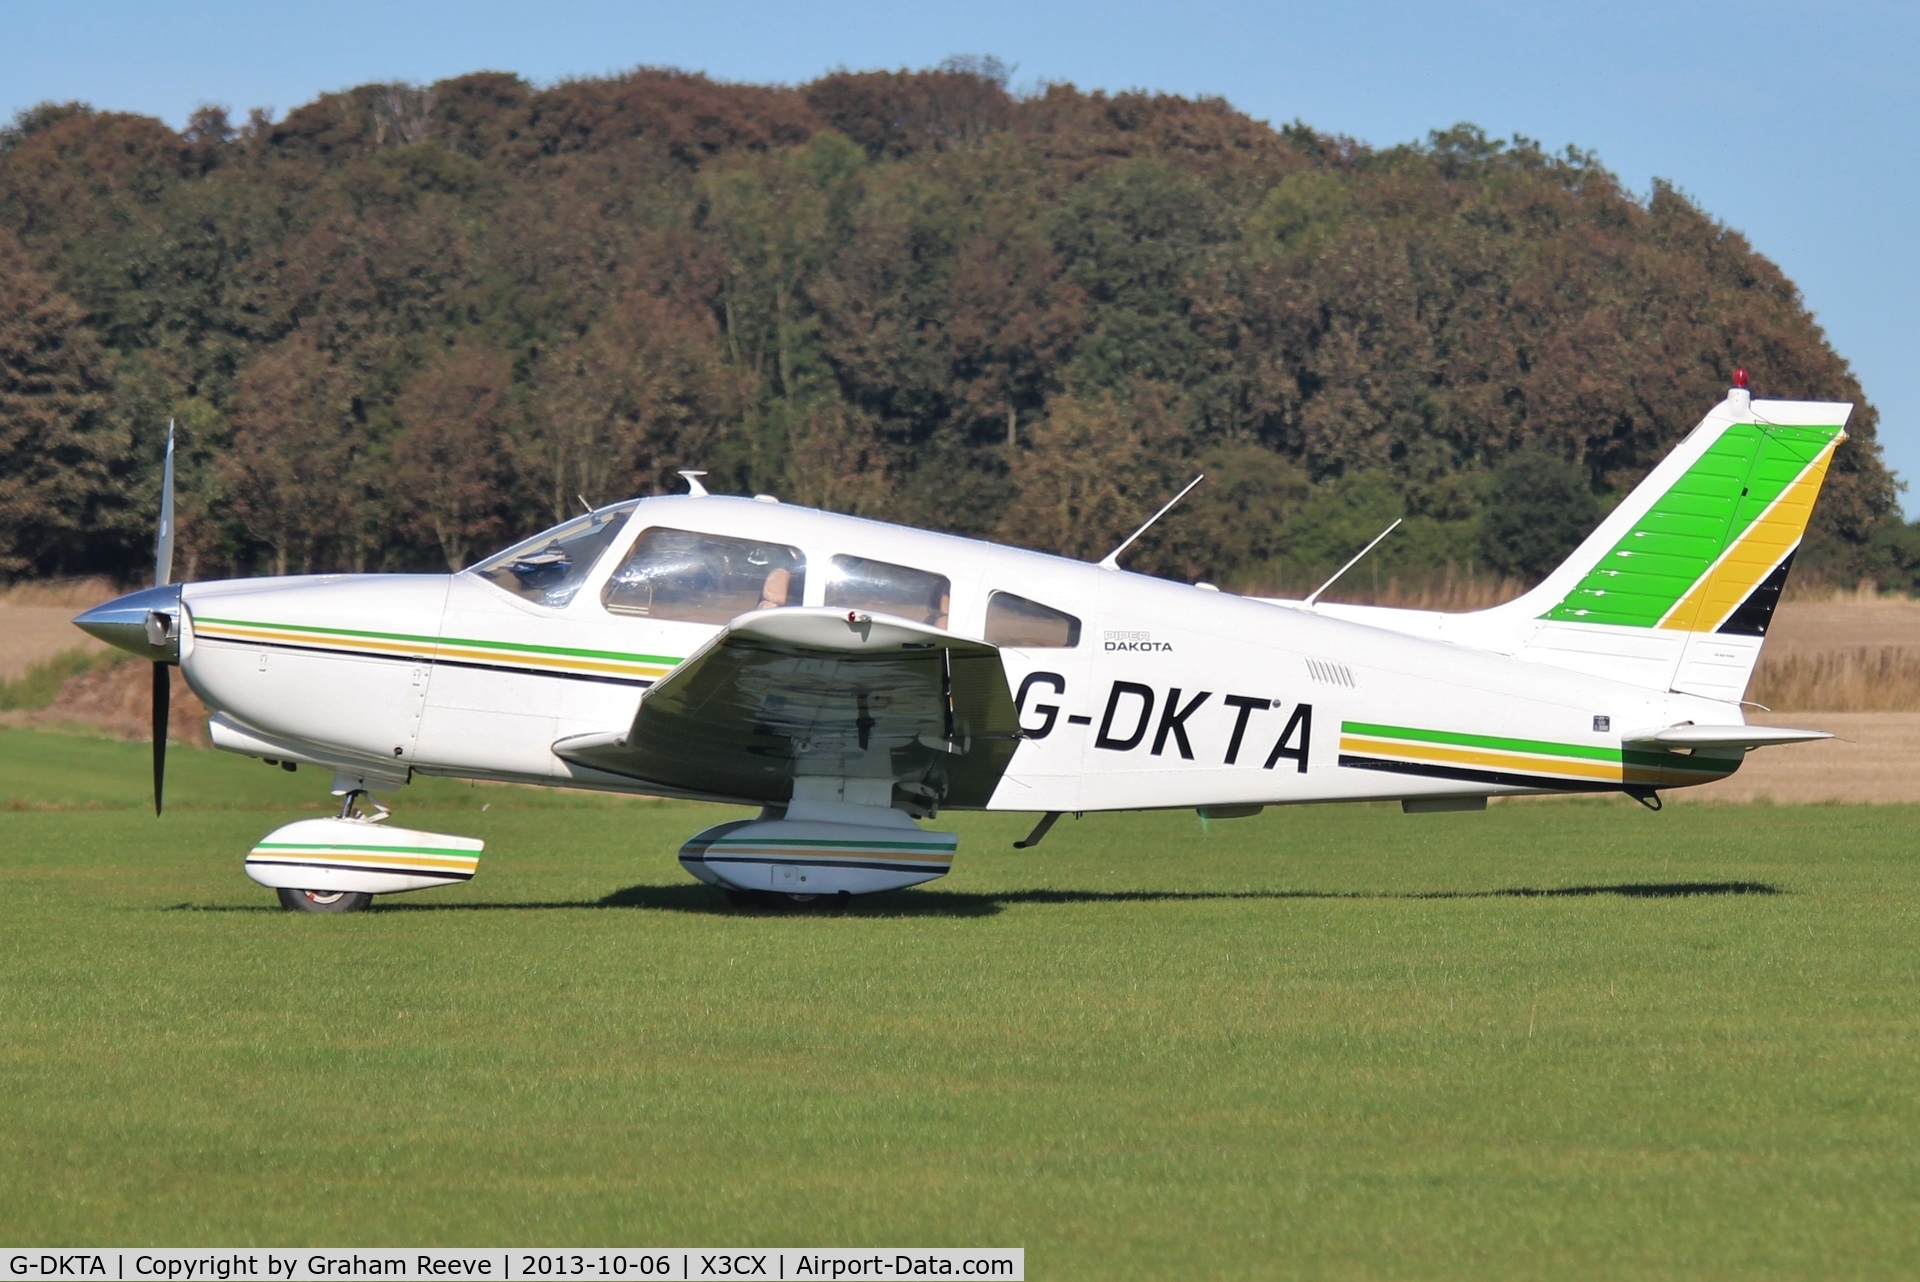 G-DKTA, 1980 Piper PA-28-236 Dakota C/N 28-8011089, Parked at Northrepps.